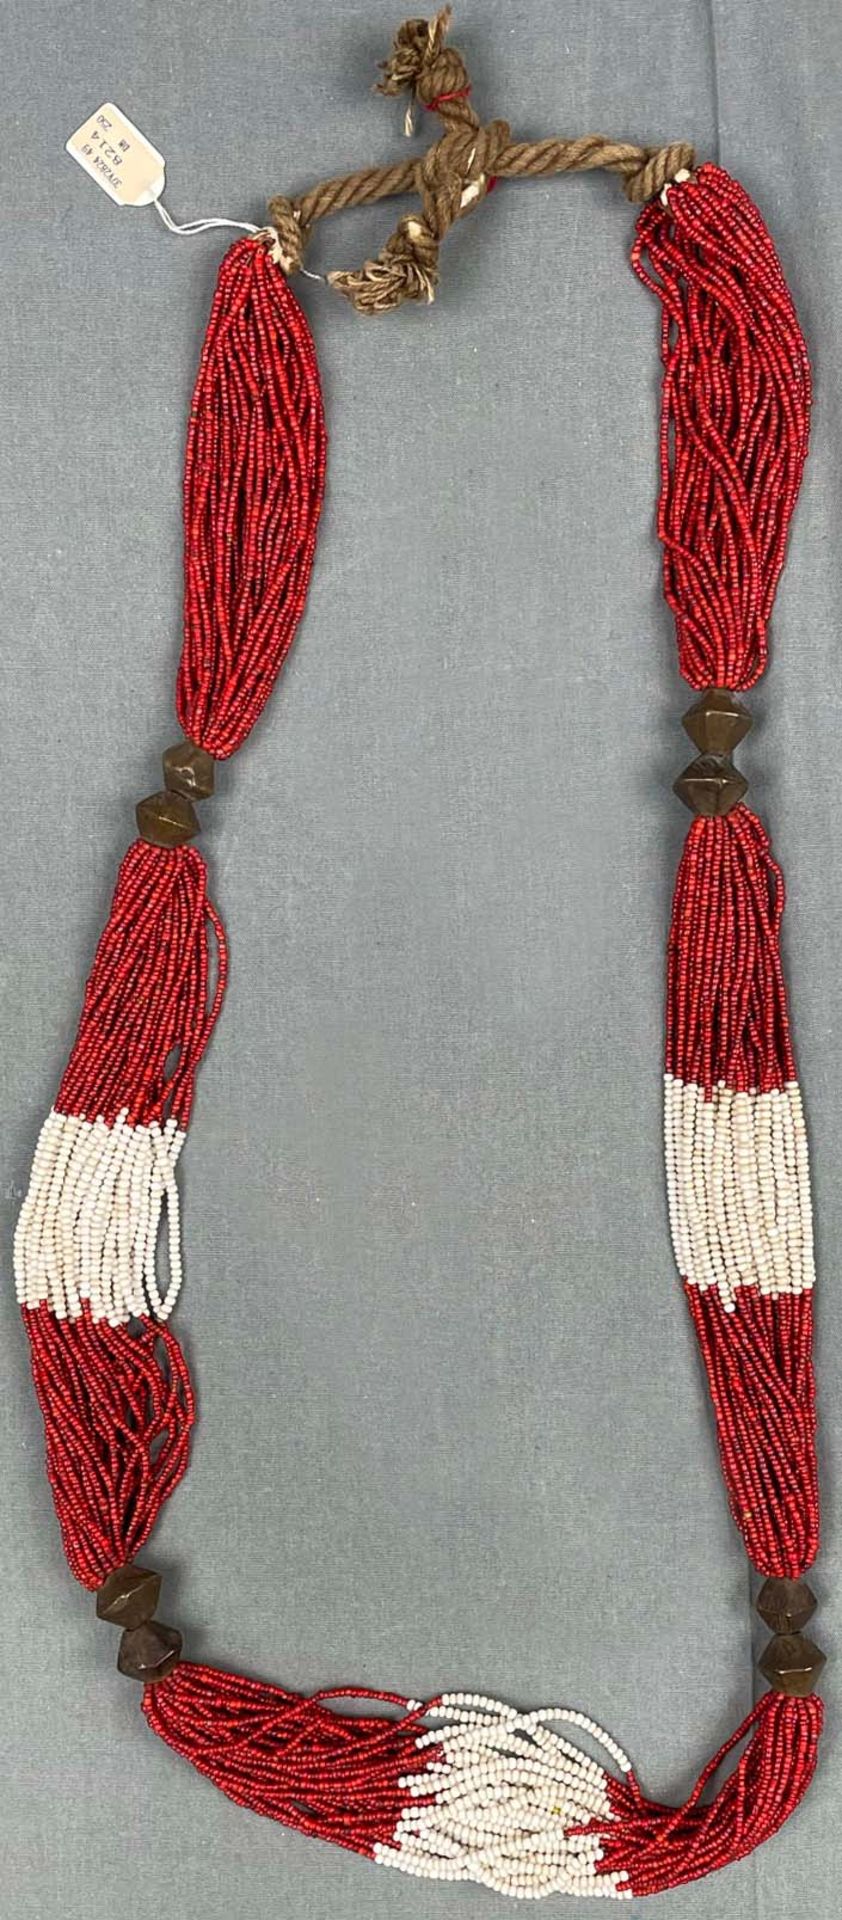 Halskette, Collier. Wohl Tibet, Mongolei, China antik. - Bild 4 aus 14